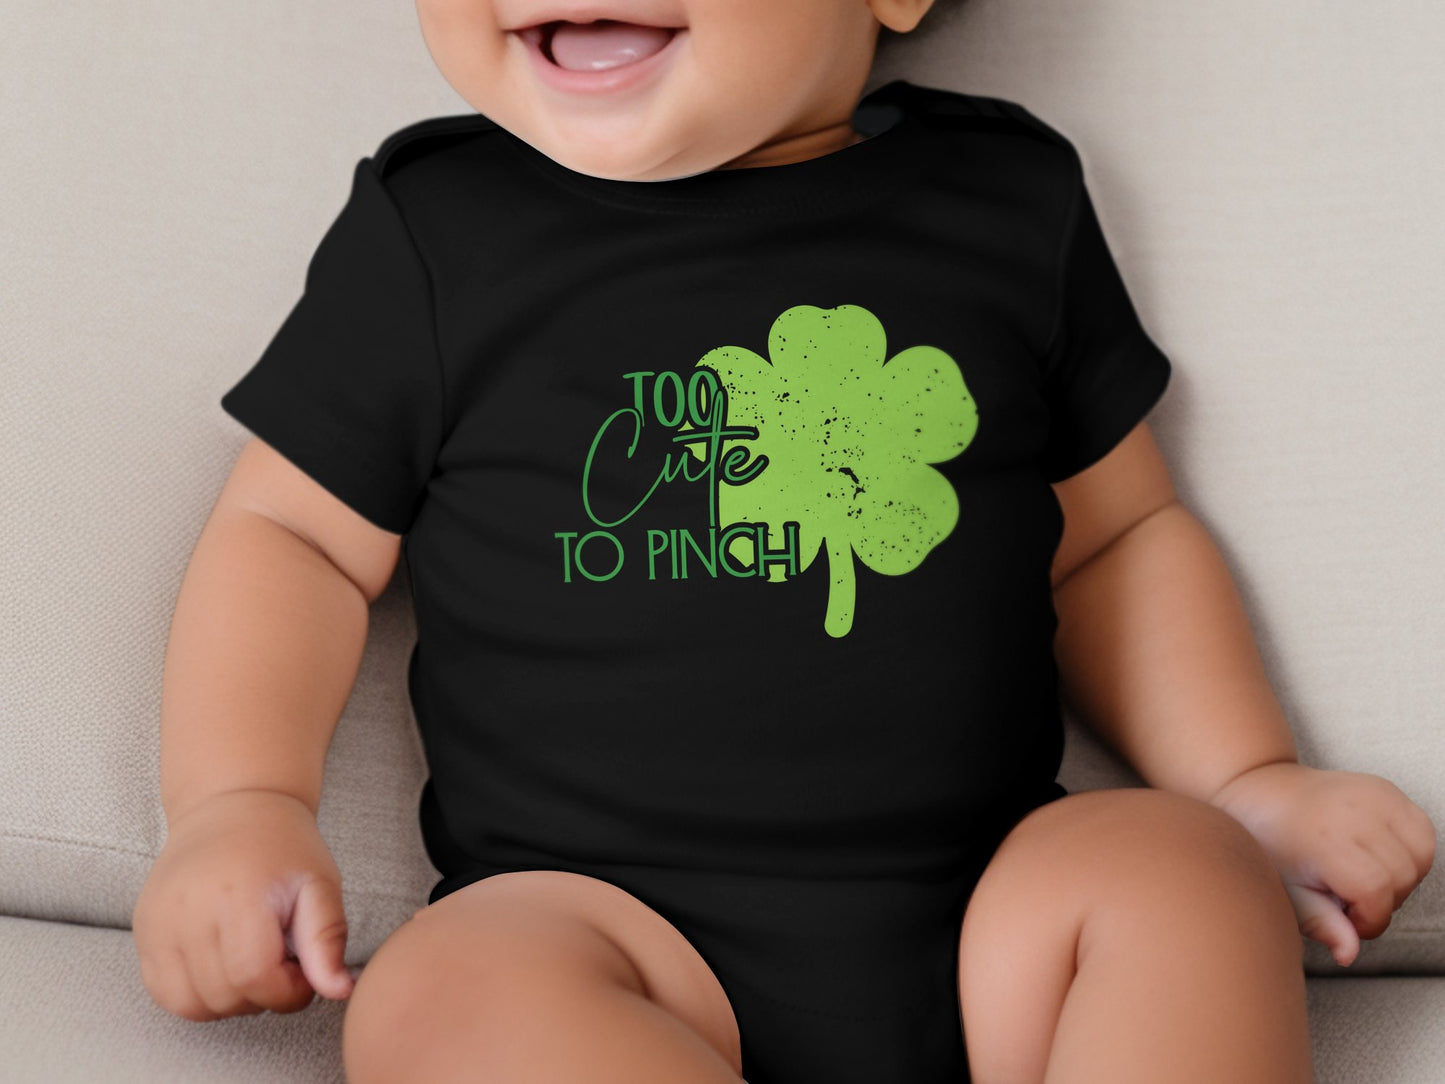 Baby Too Cute To Pinch Shamrock Bodysuit - Mardonyx T-Shirt